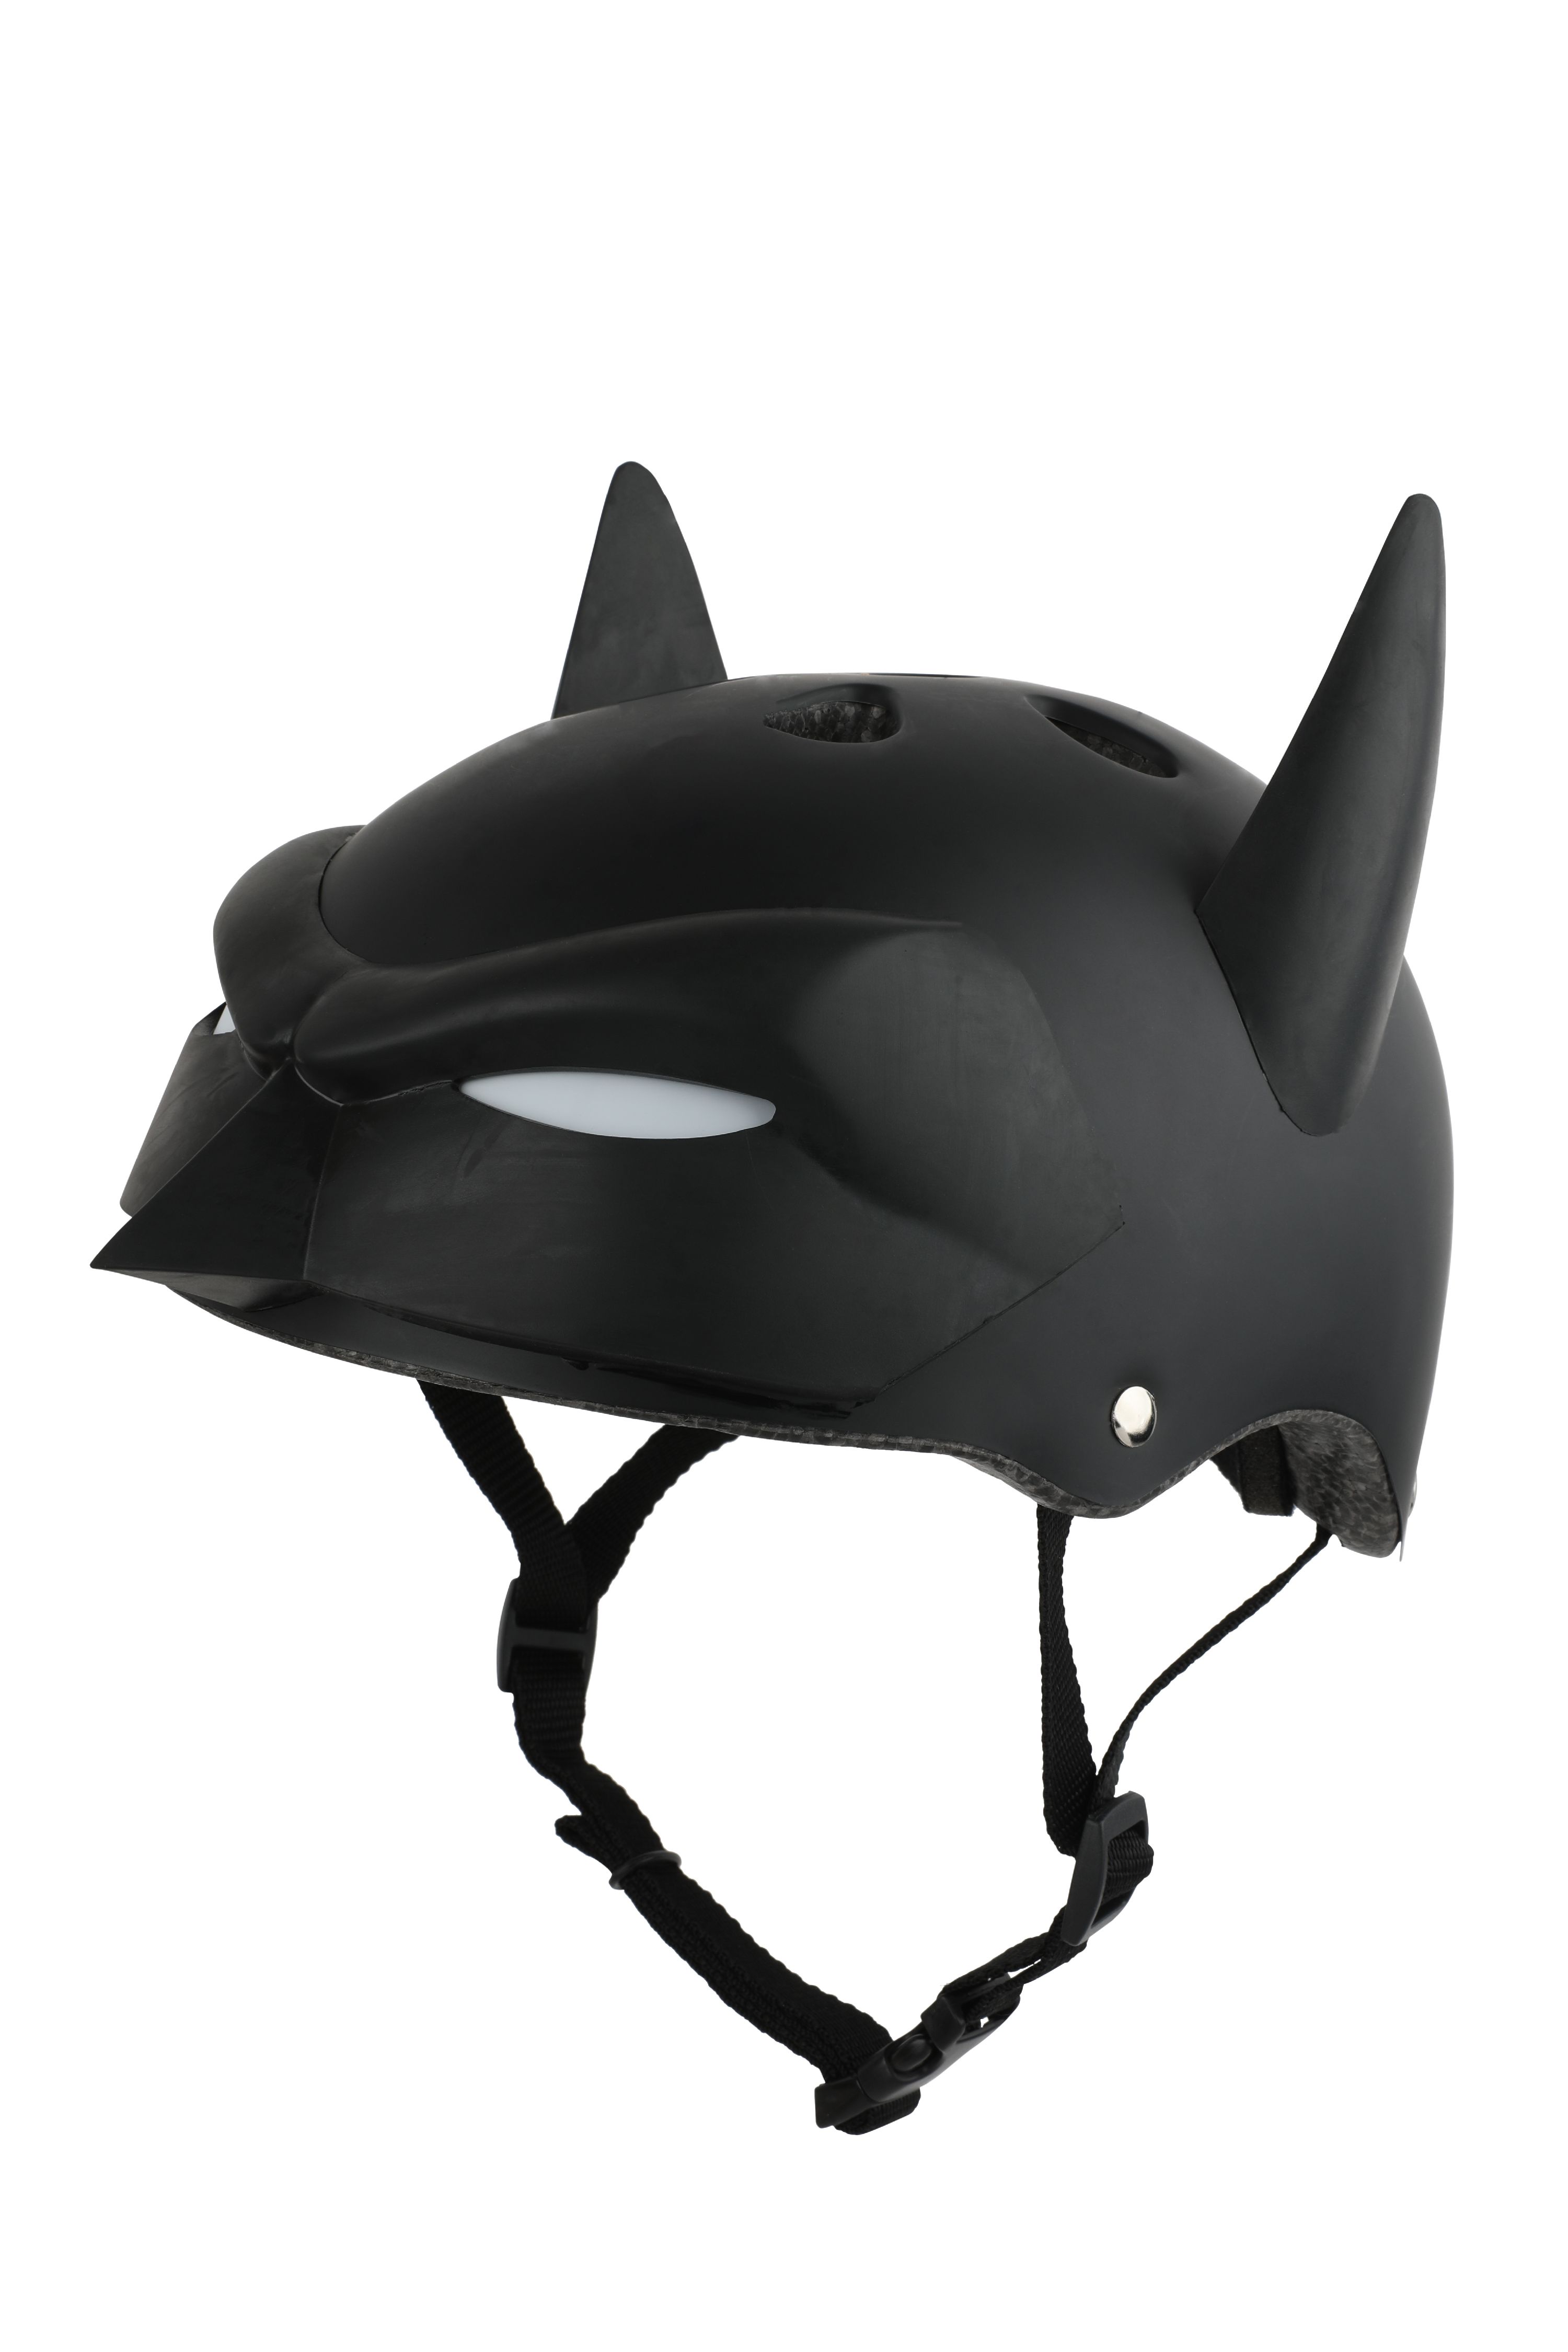 3D Batman Helmet - image 1 of 2